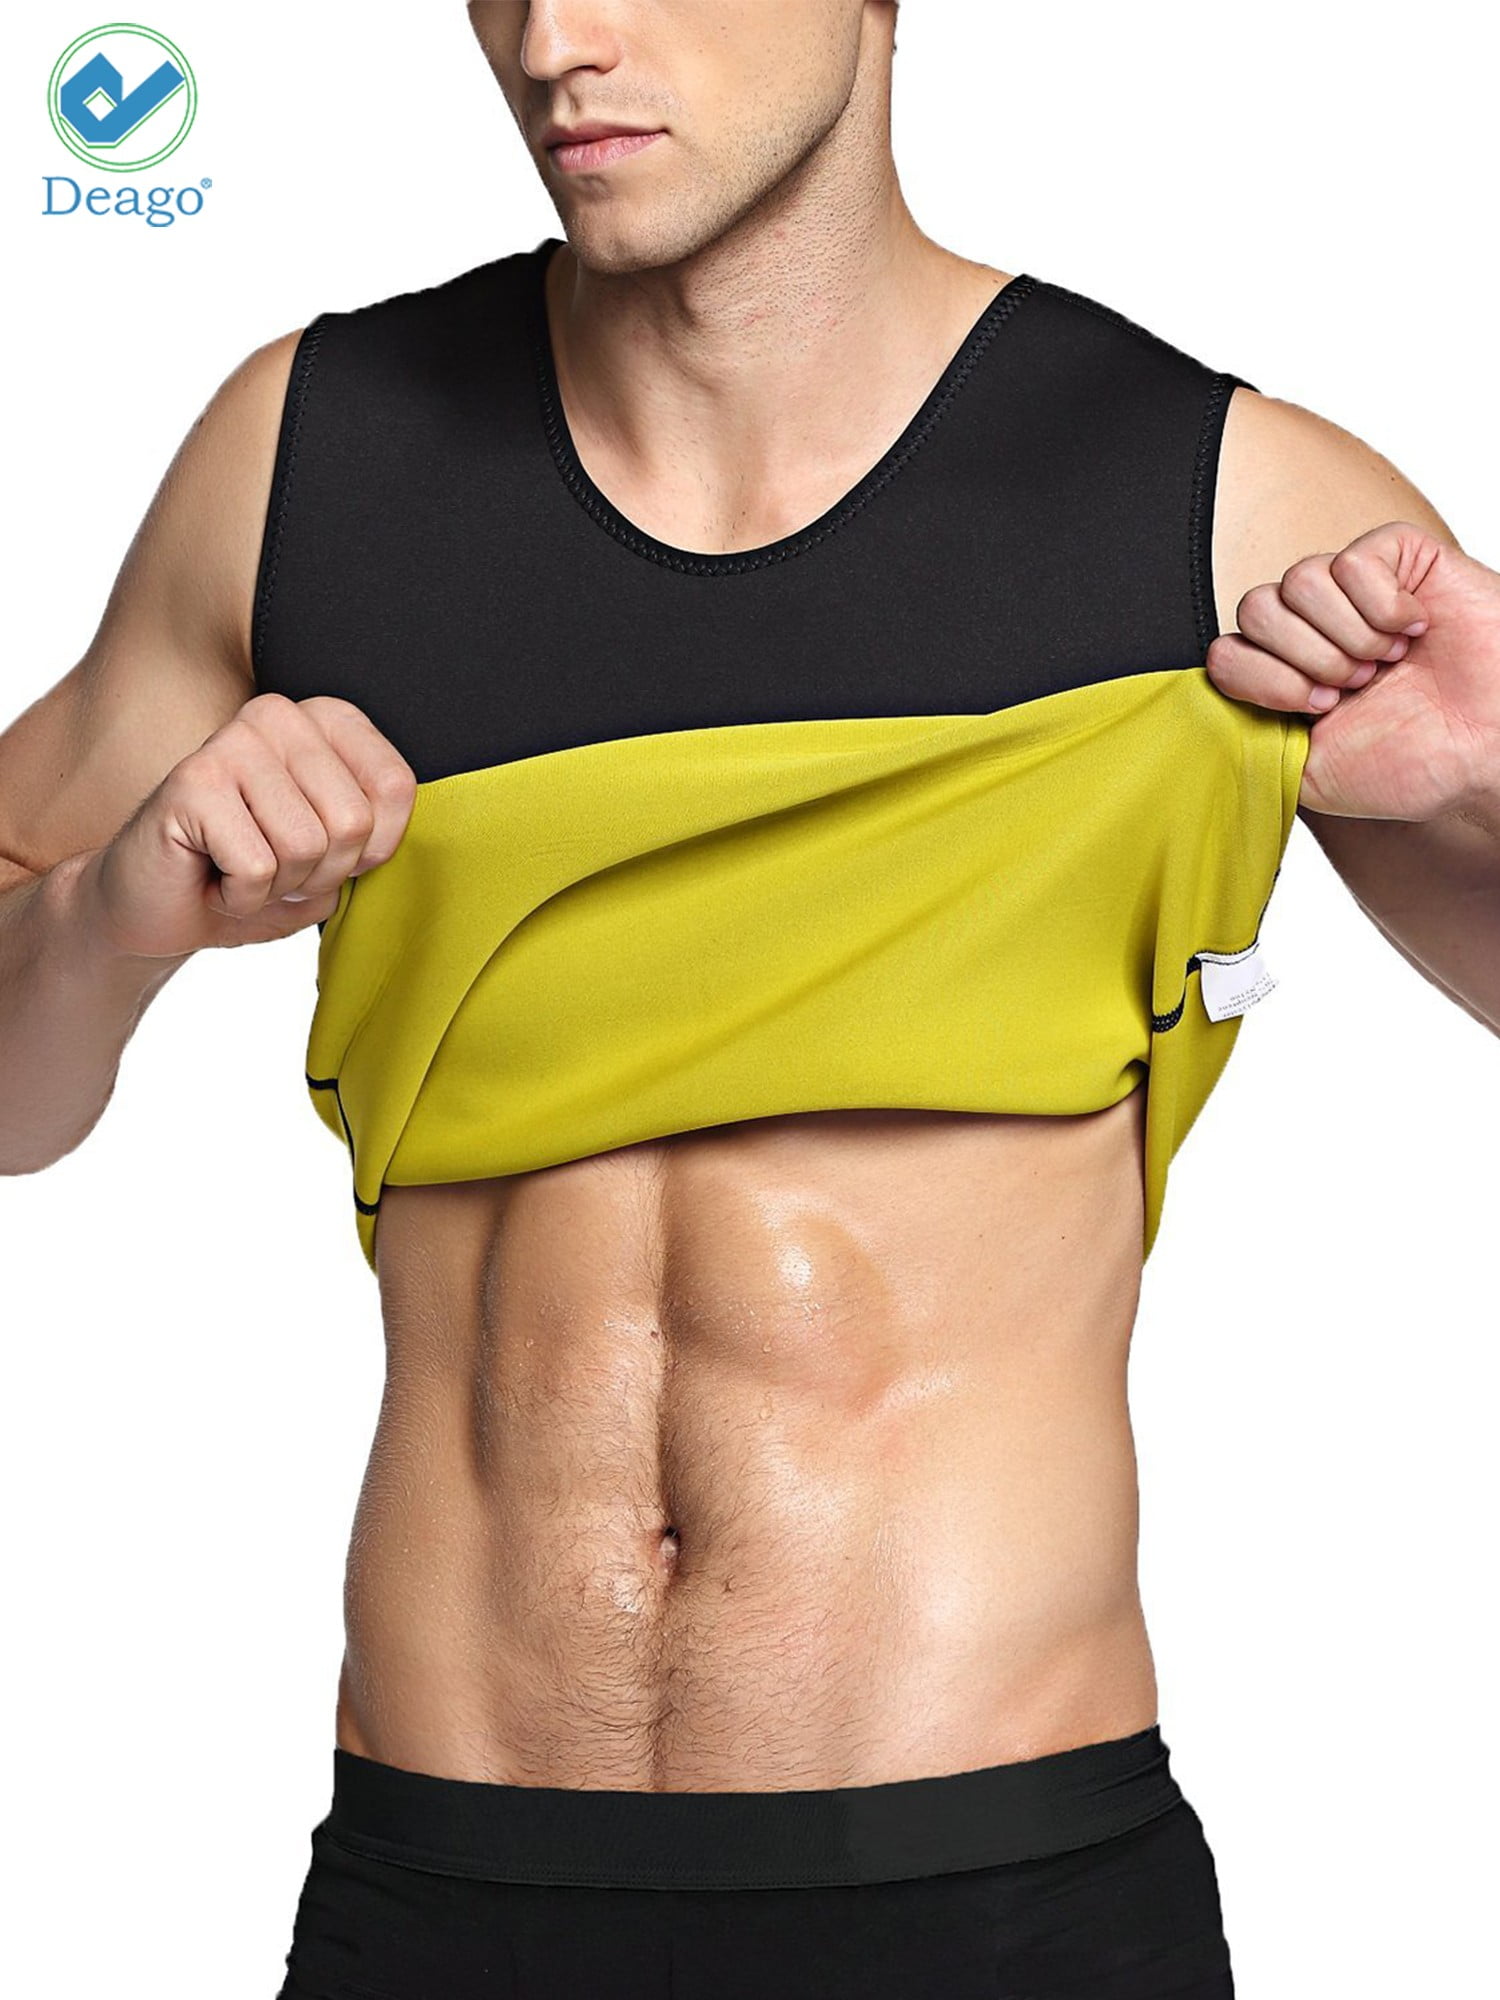 Men Neoprene Sauna Thermo Sweat Body Shaper Waist Trainer Fat Burner Corset Vest 